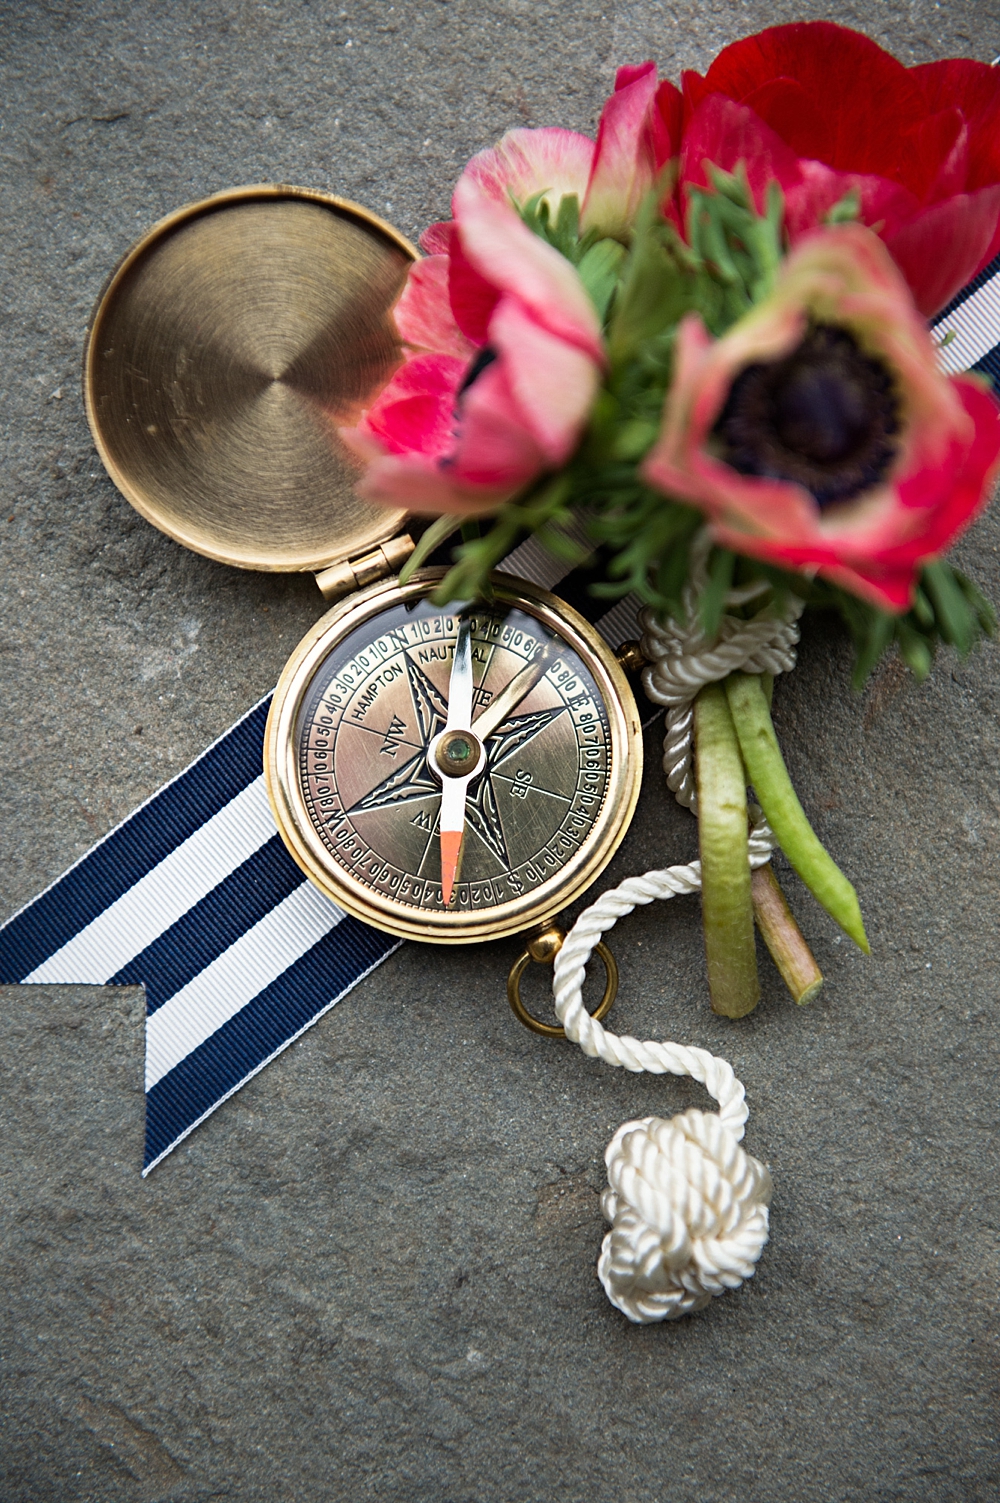 Nautical wedding details with a compass wedding favor